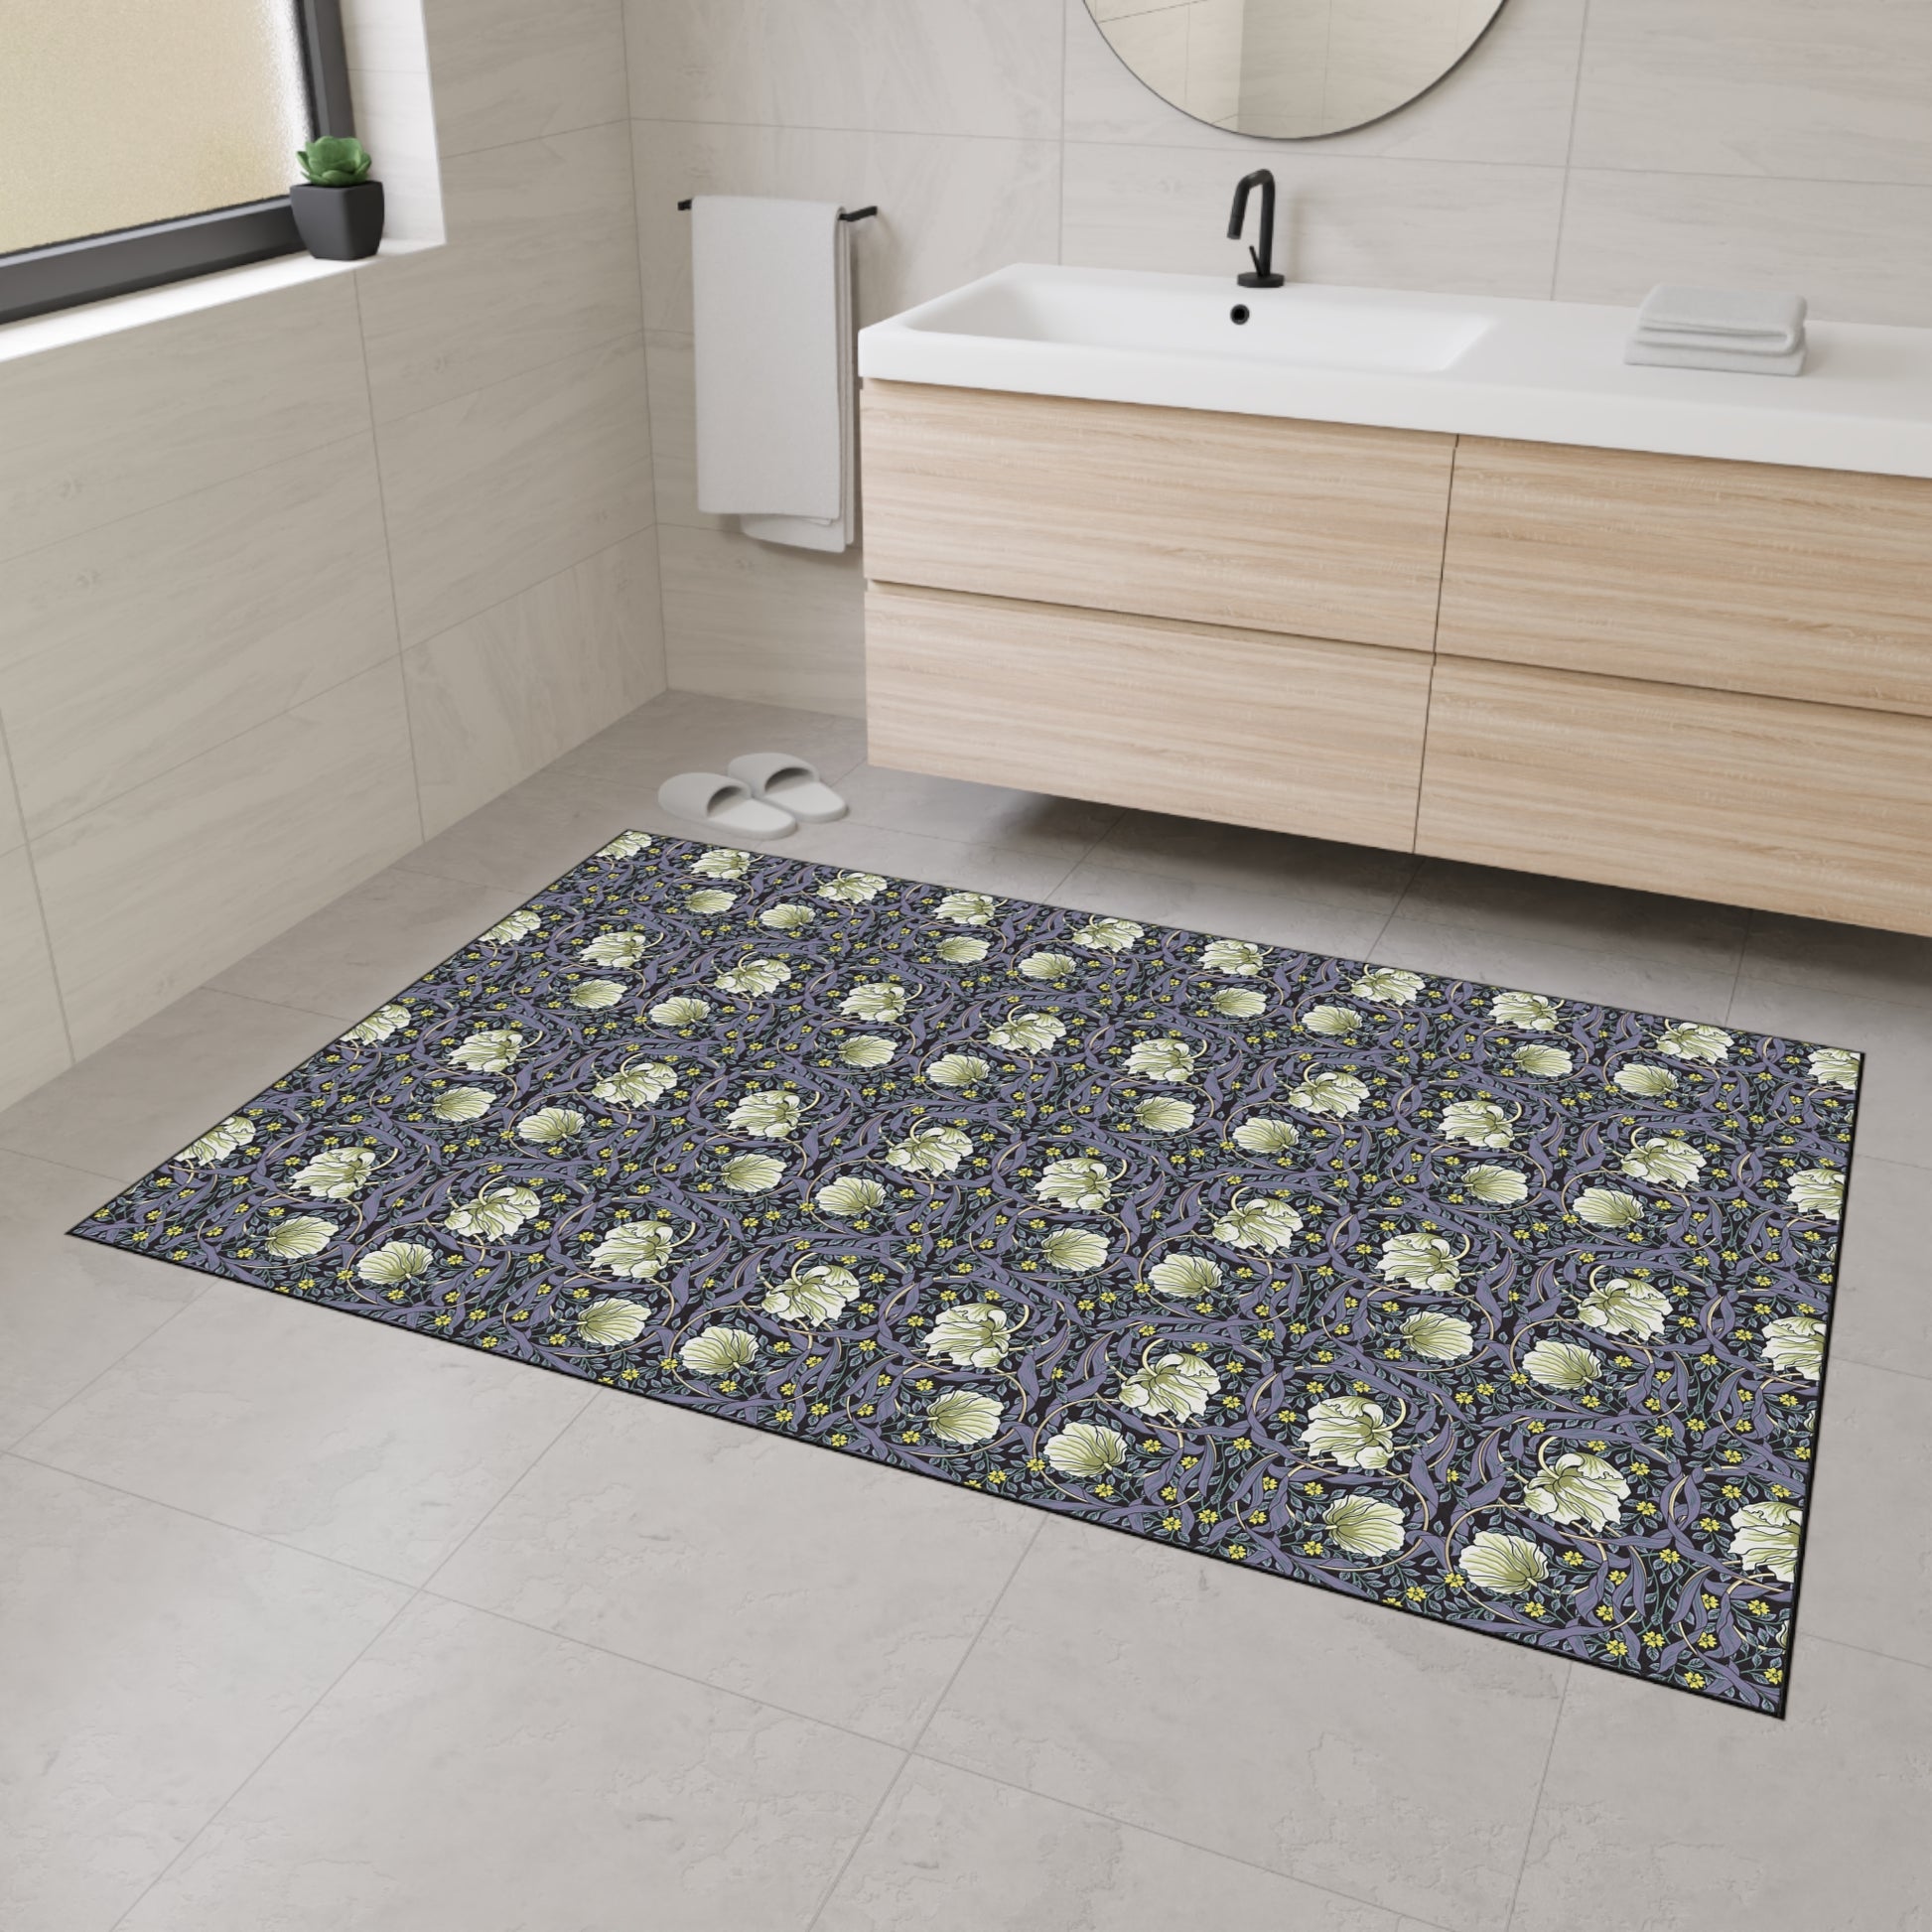 william-morris-co-heavy-duty-floor-mat-floor-mat-pimpernel-collection-lavender-8